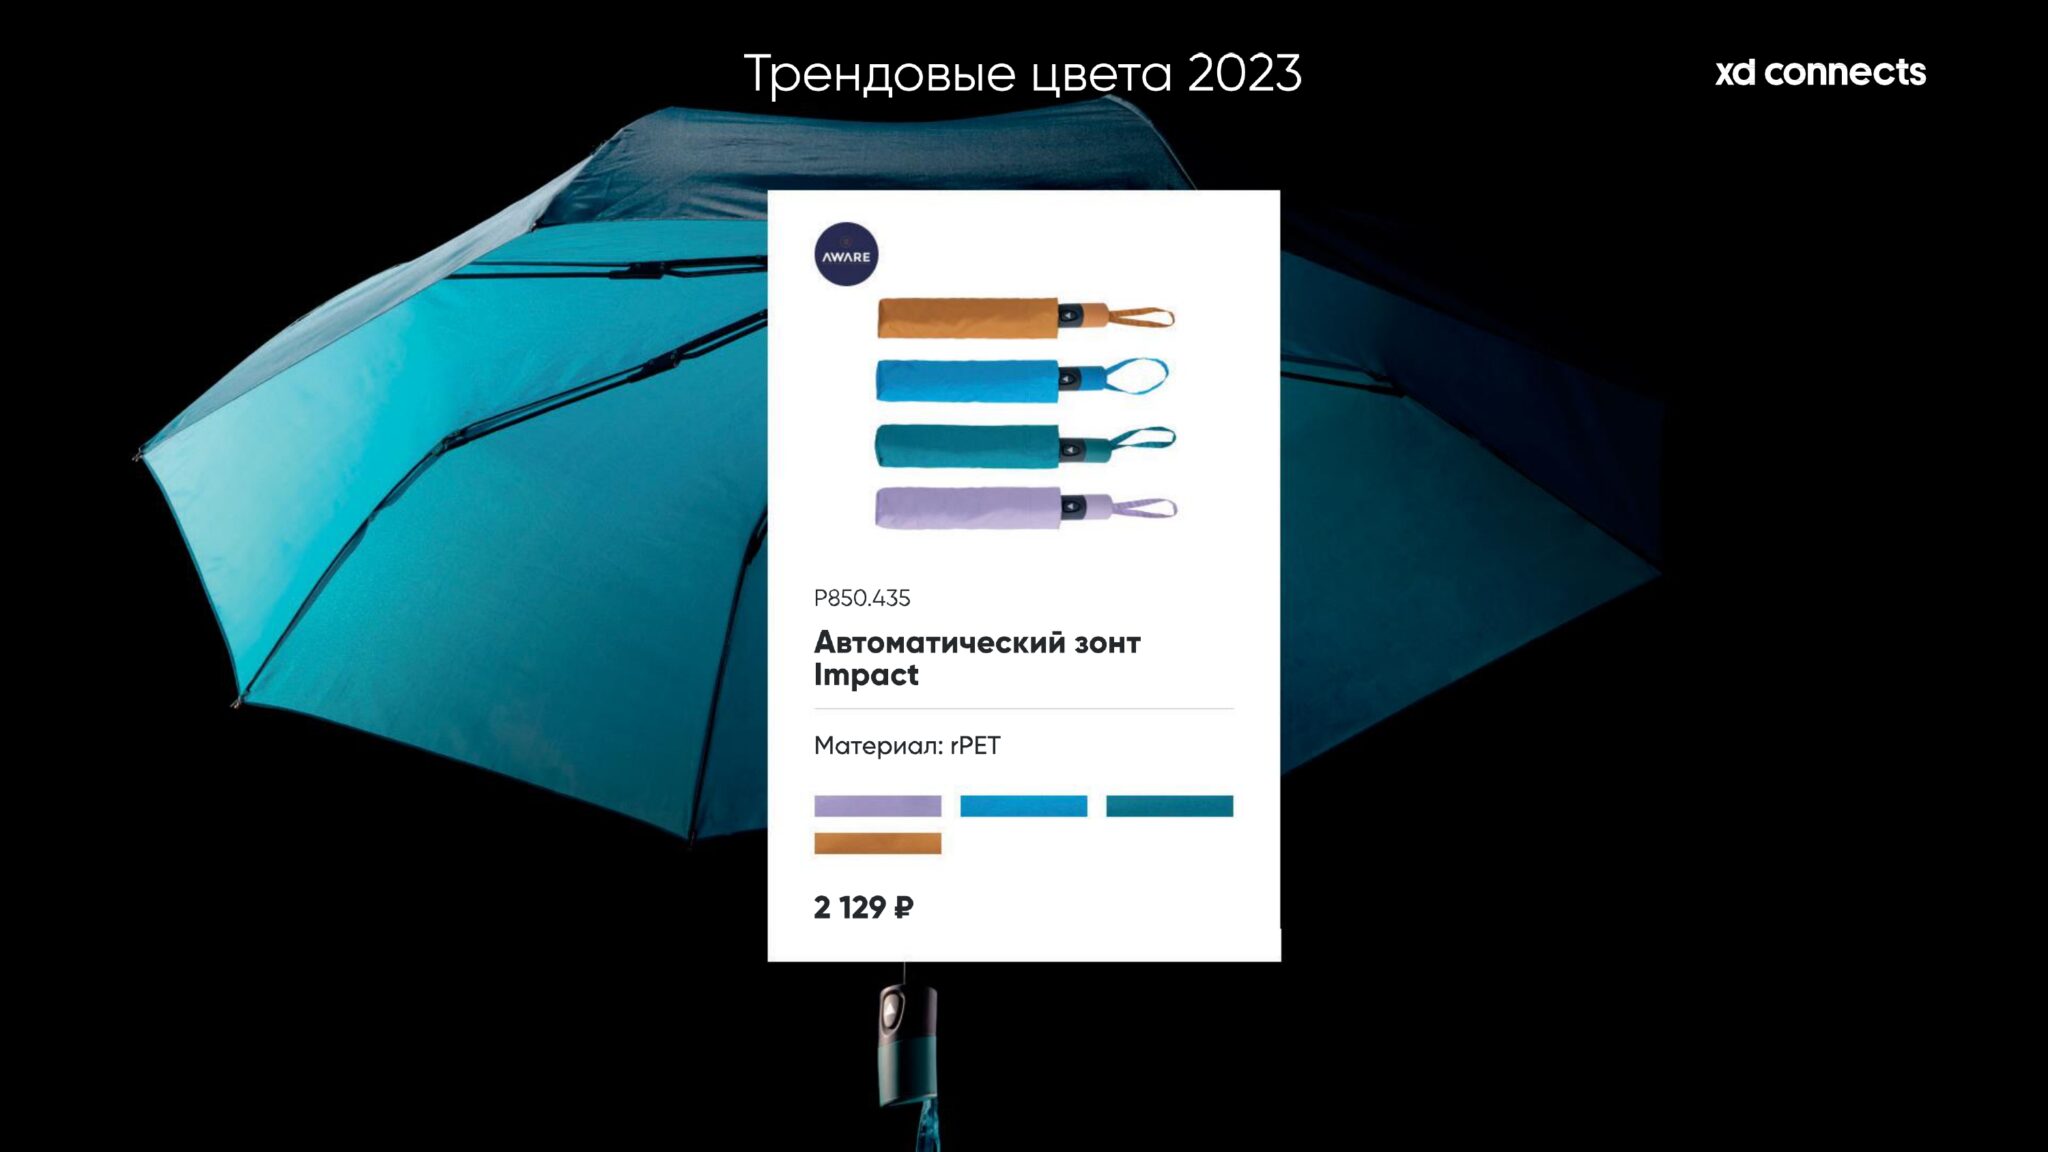 <img src="umbrellas with logo.jpg" alt="Зонты с логотипом"> 